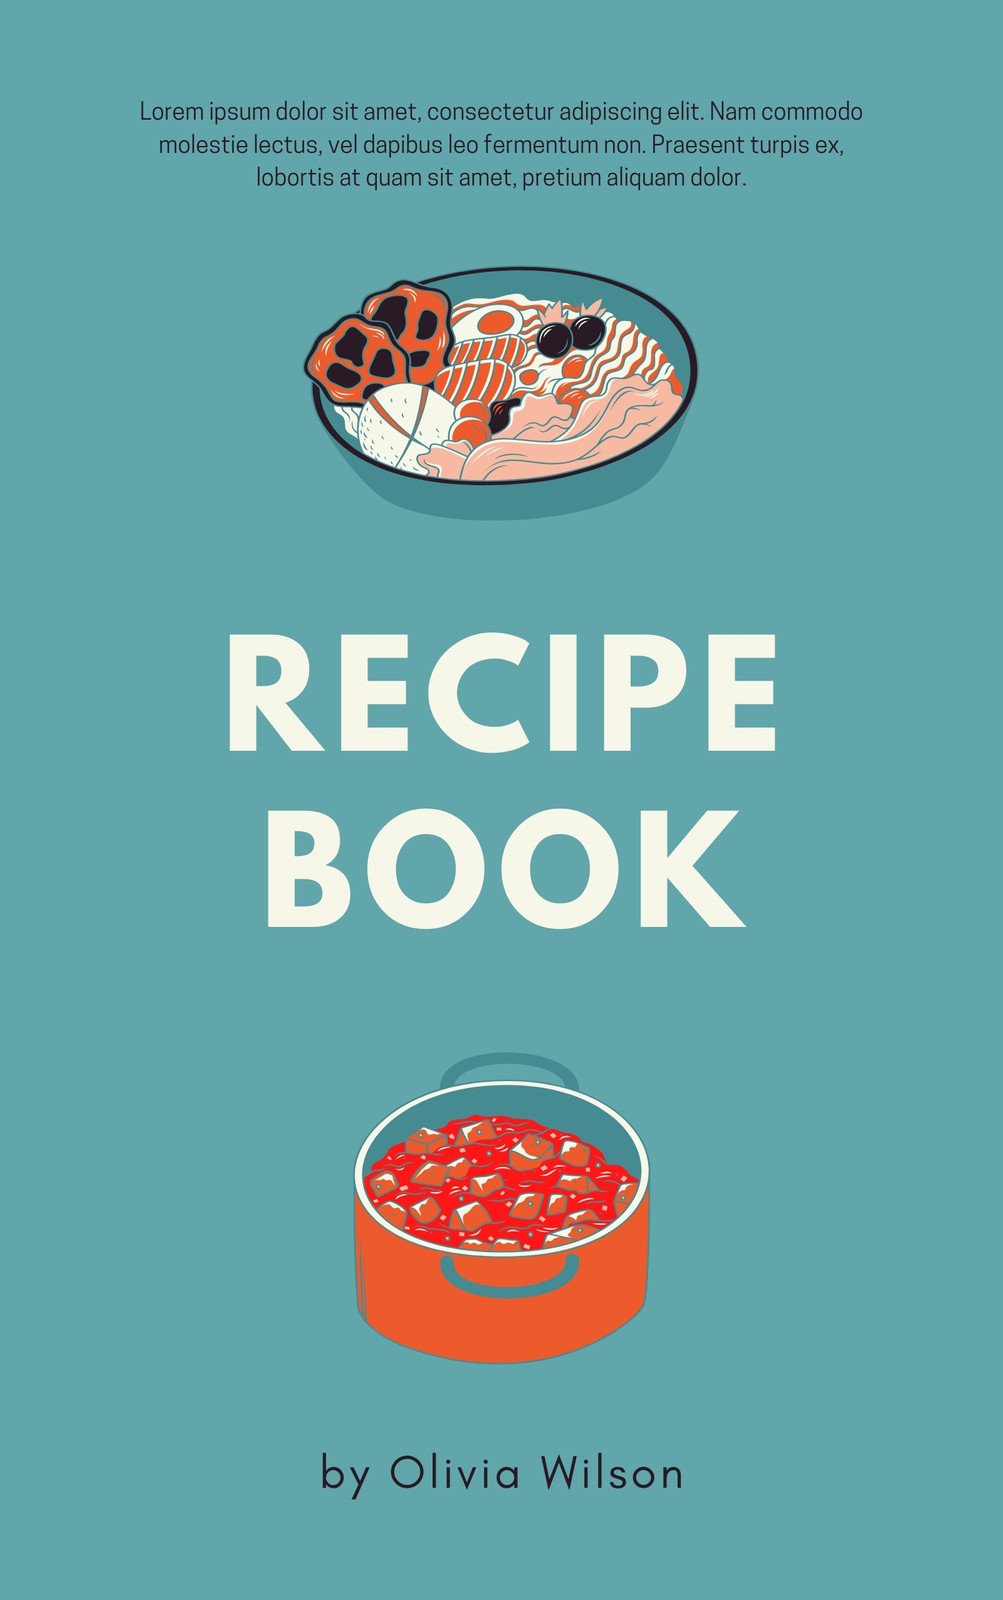 Recipe Book Cover Printable